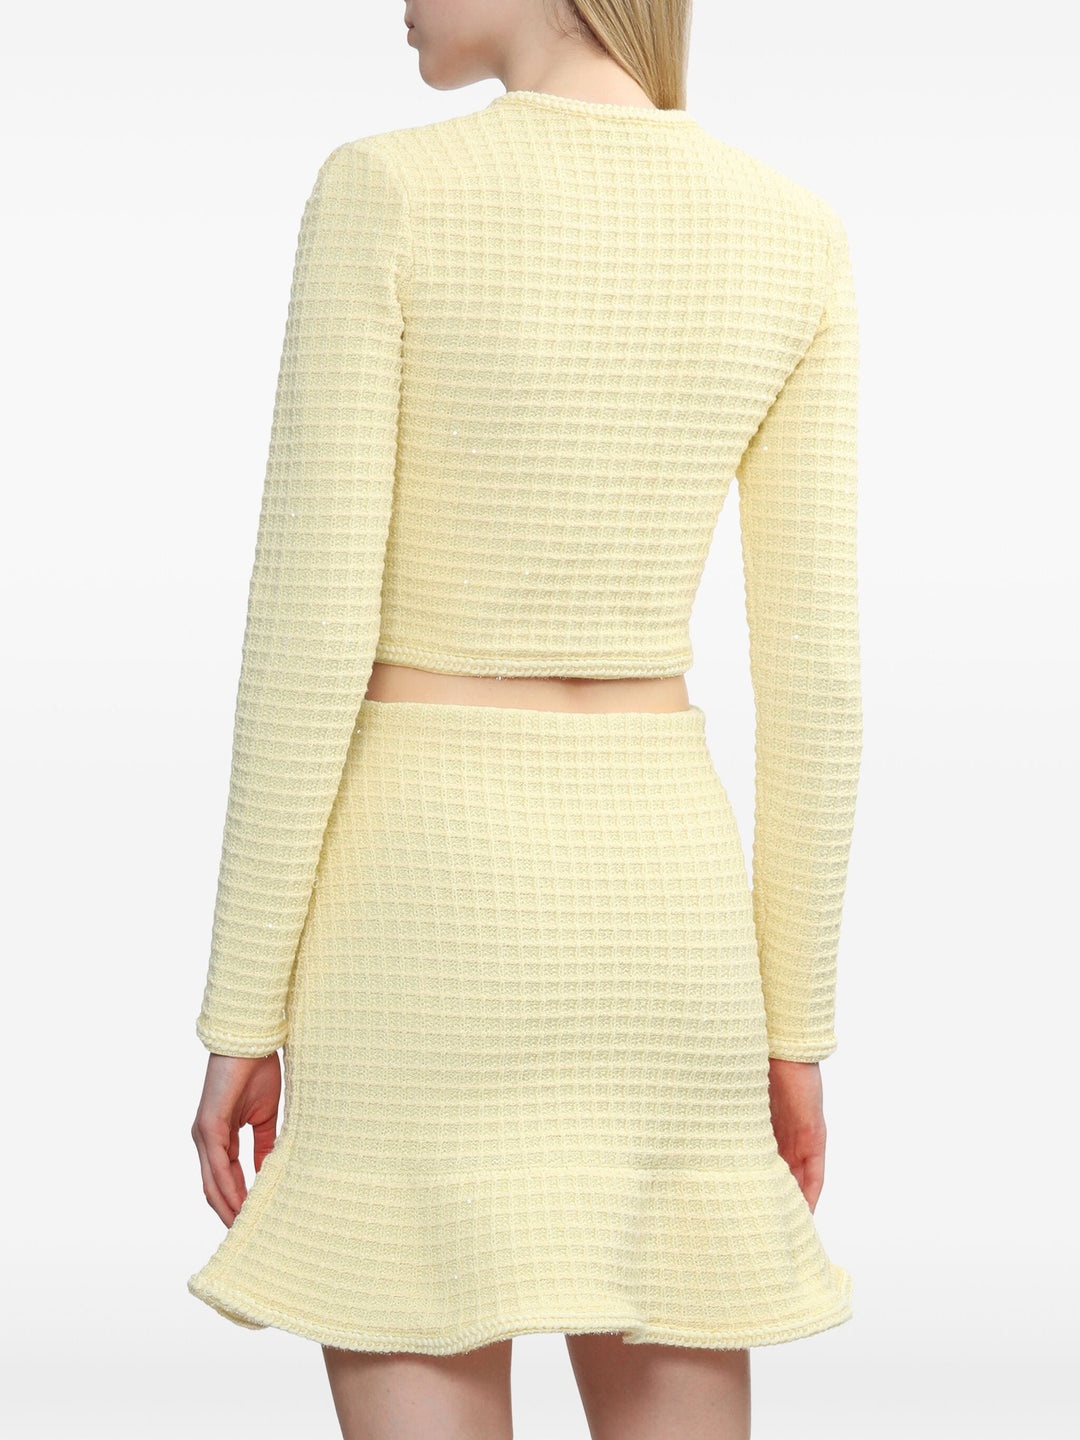 Yellow Textured Knit Jacket - 4